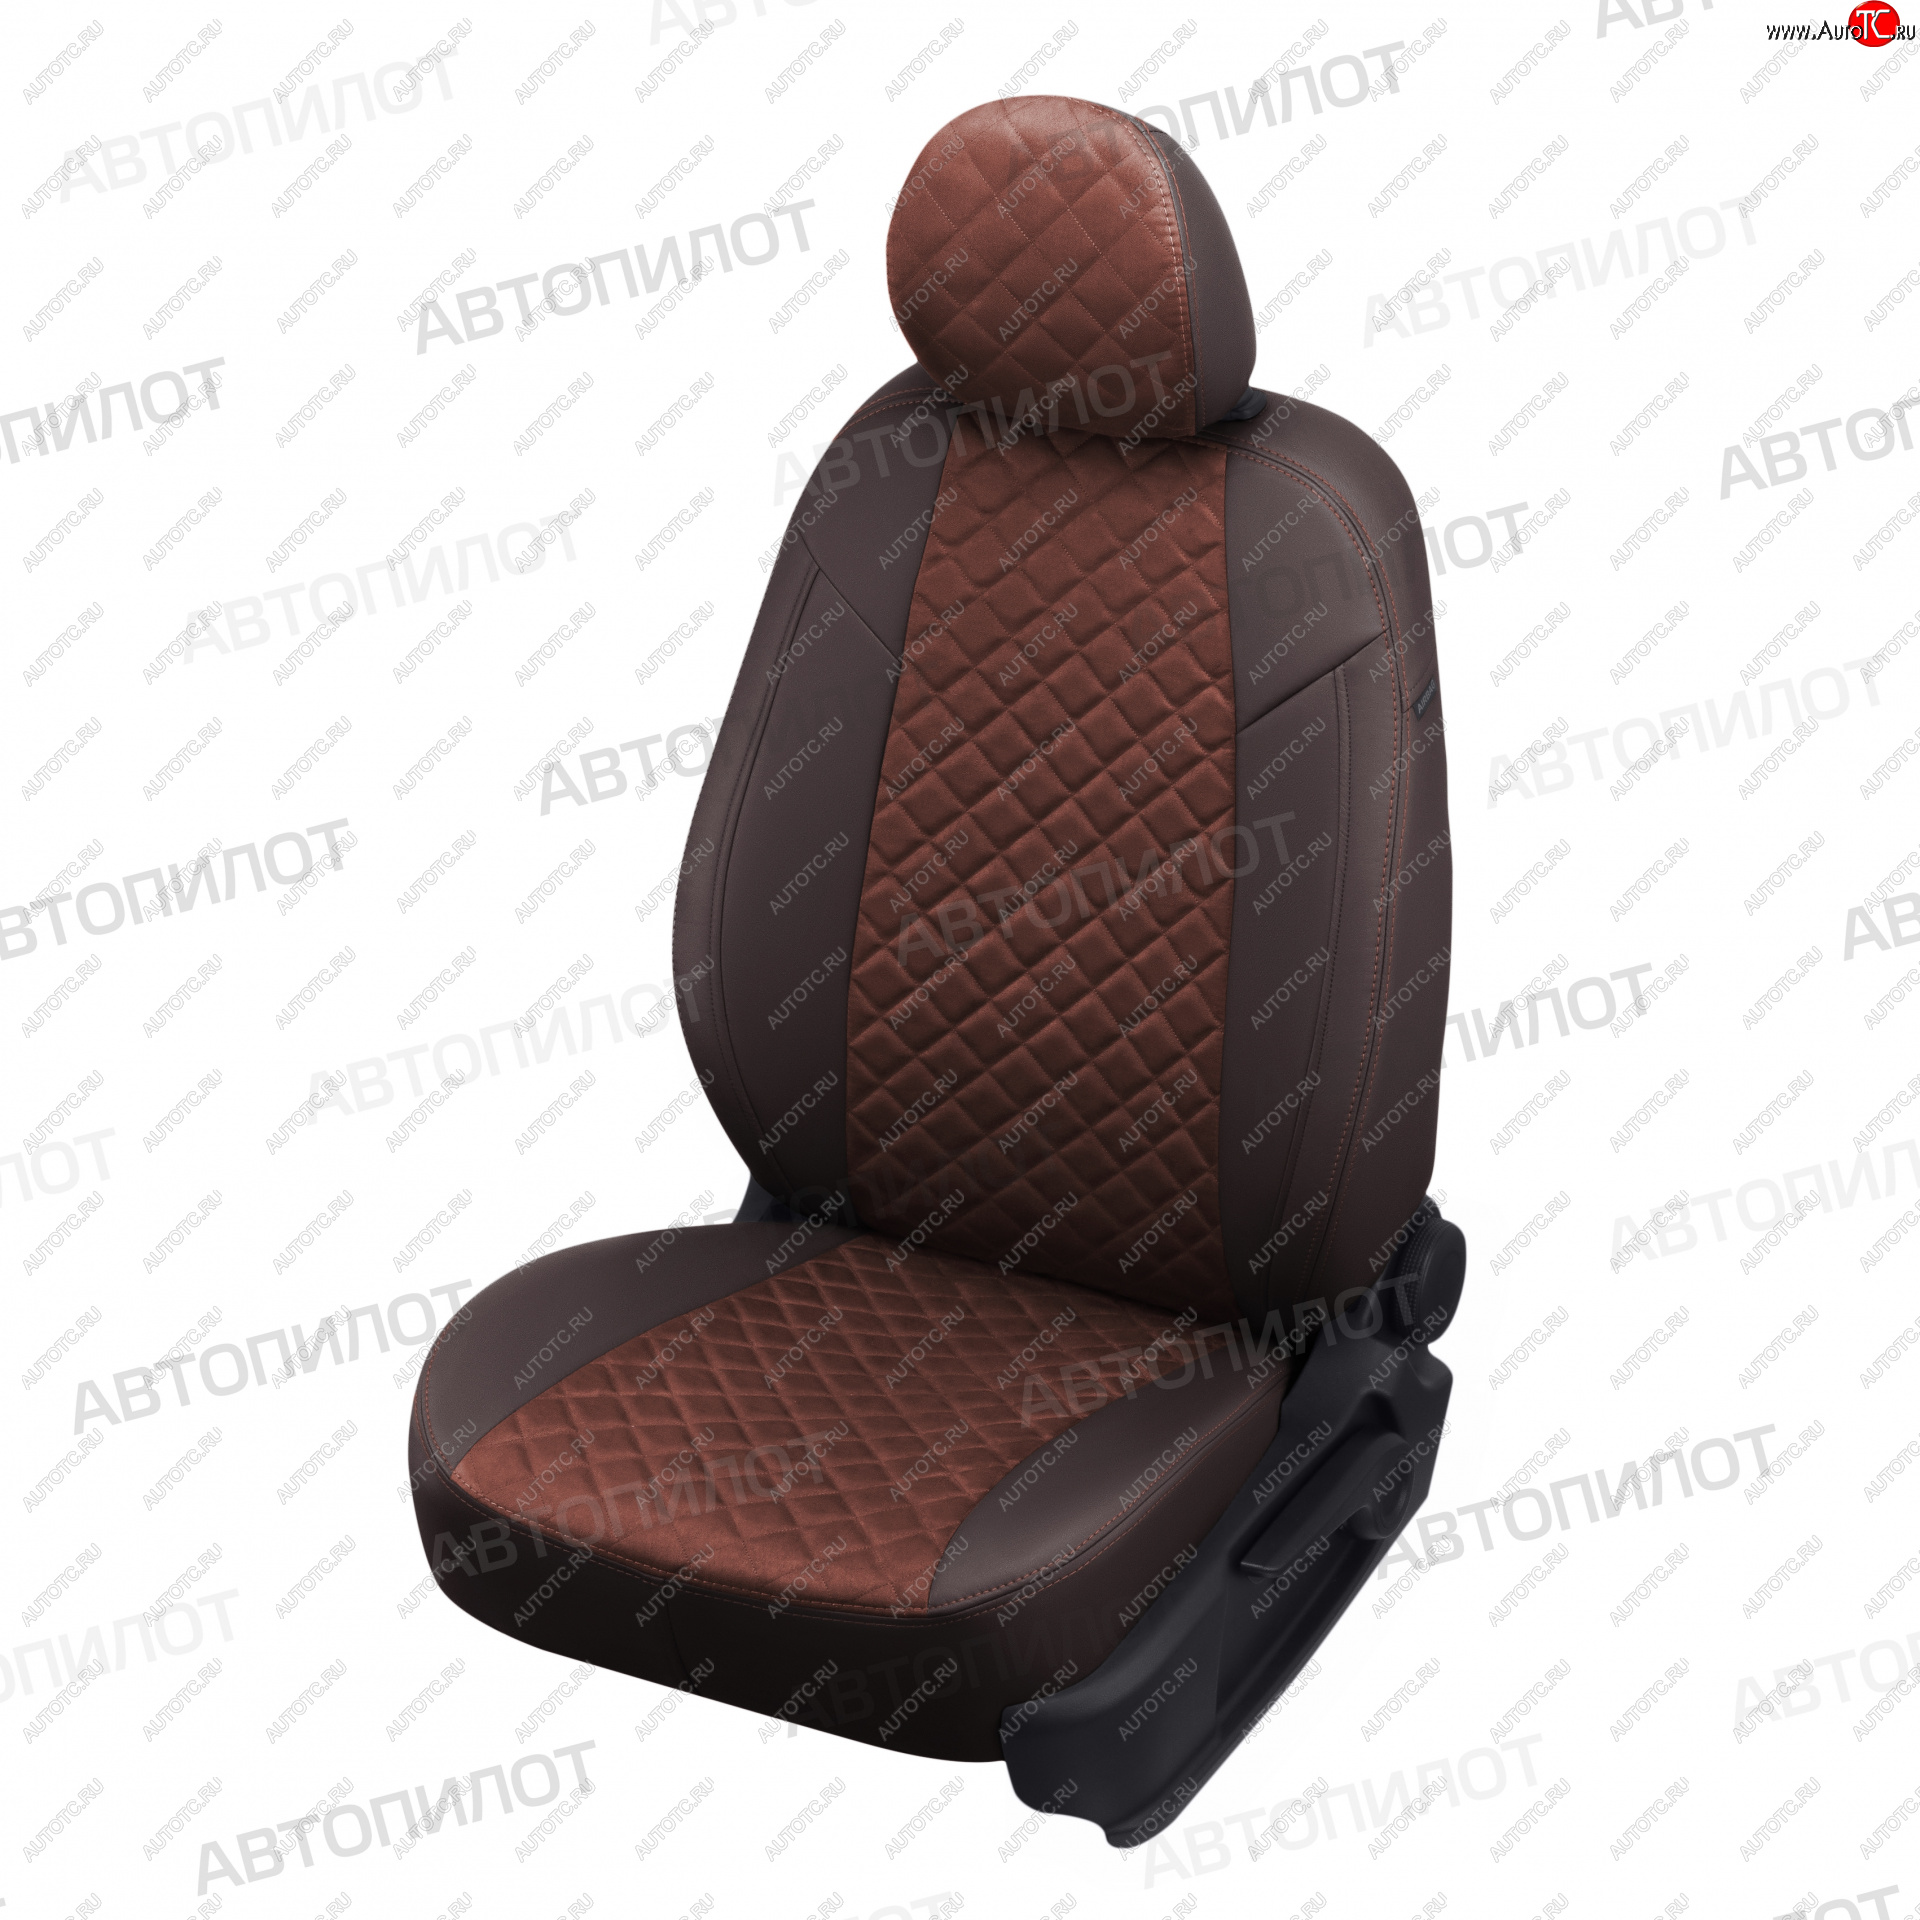 13 999 р. Чехлы сидений (экокожа/алькантара, 40/60) Автопилот Ромб  Volkswagen Polo  9N1 (2001-2009) (шоколад)